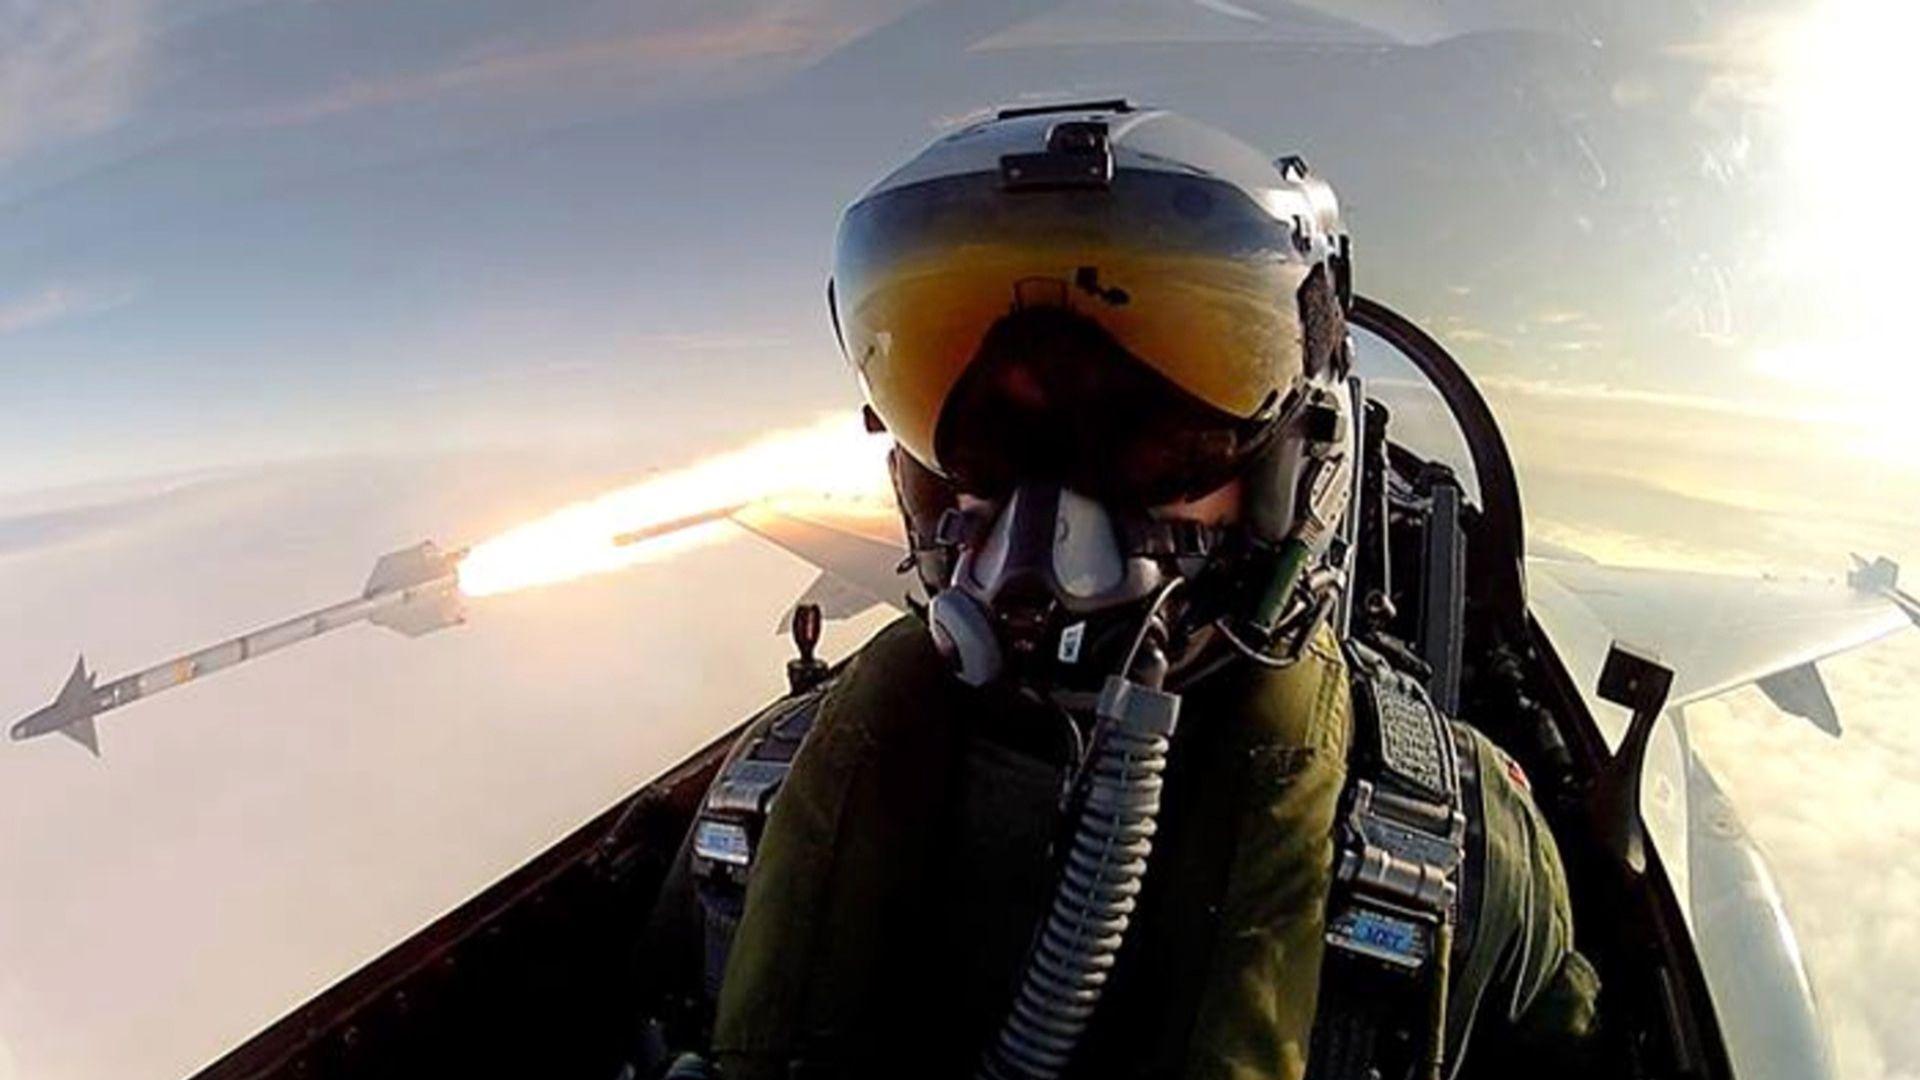 Fighter Pilot Selfie